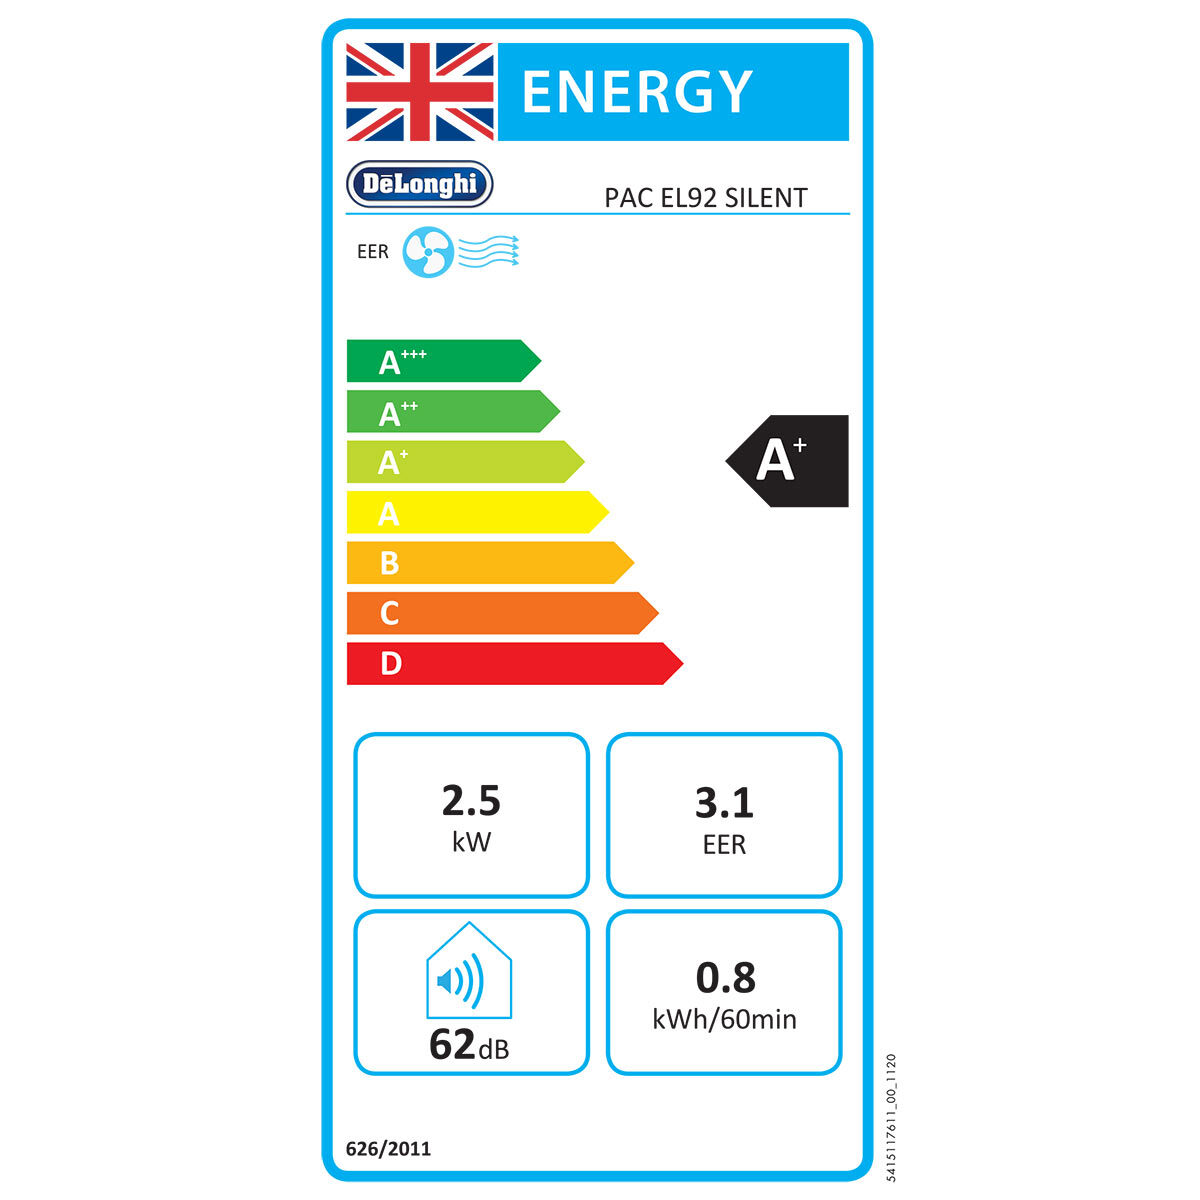 Delonghi energy rating a+